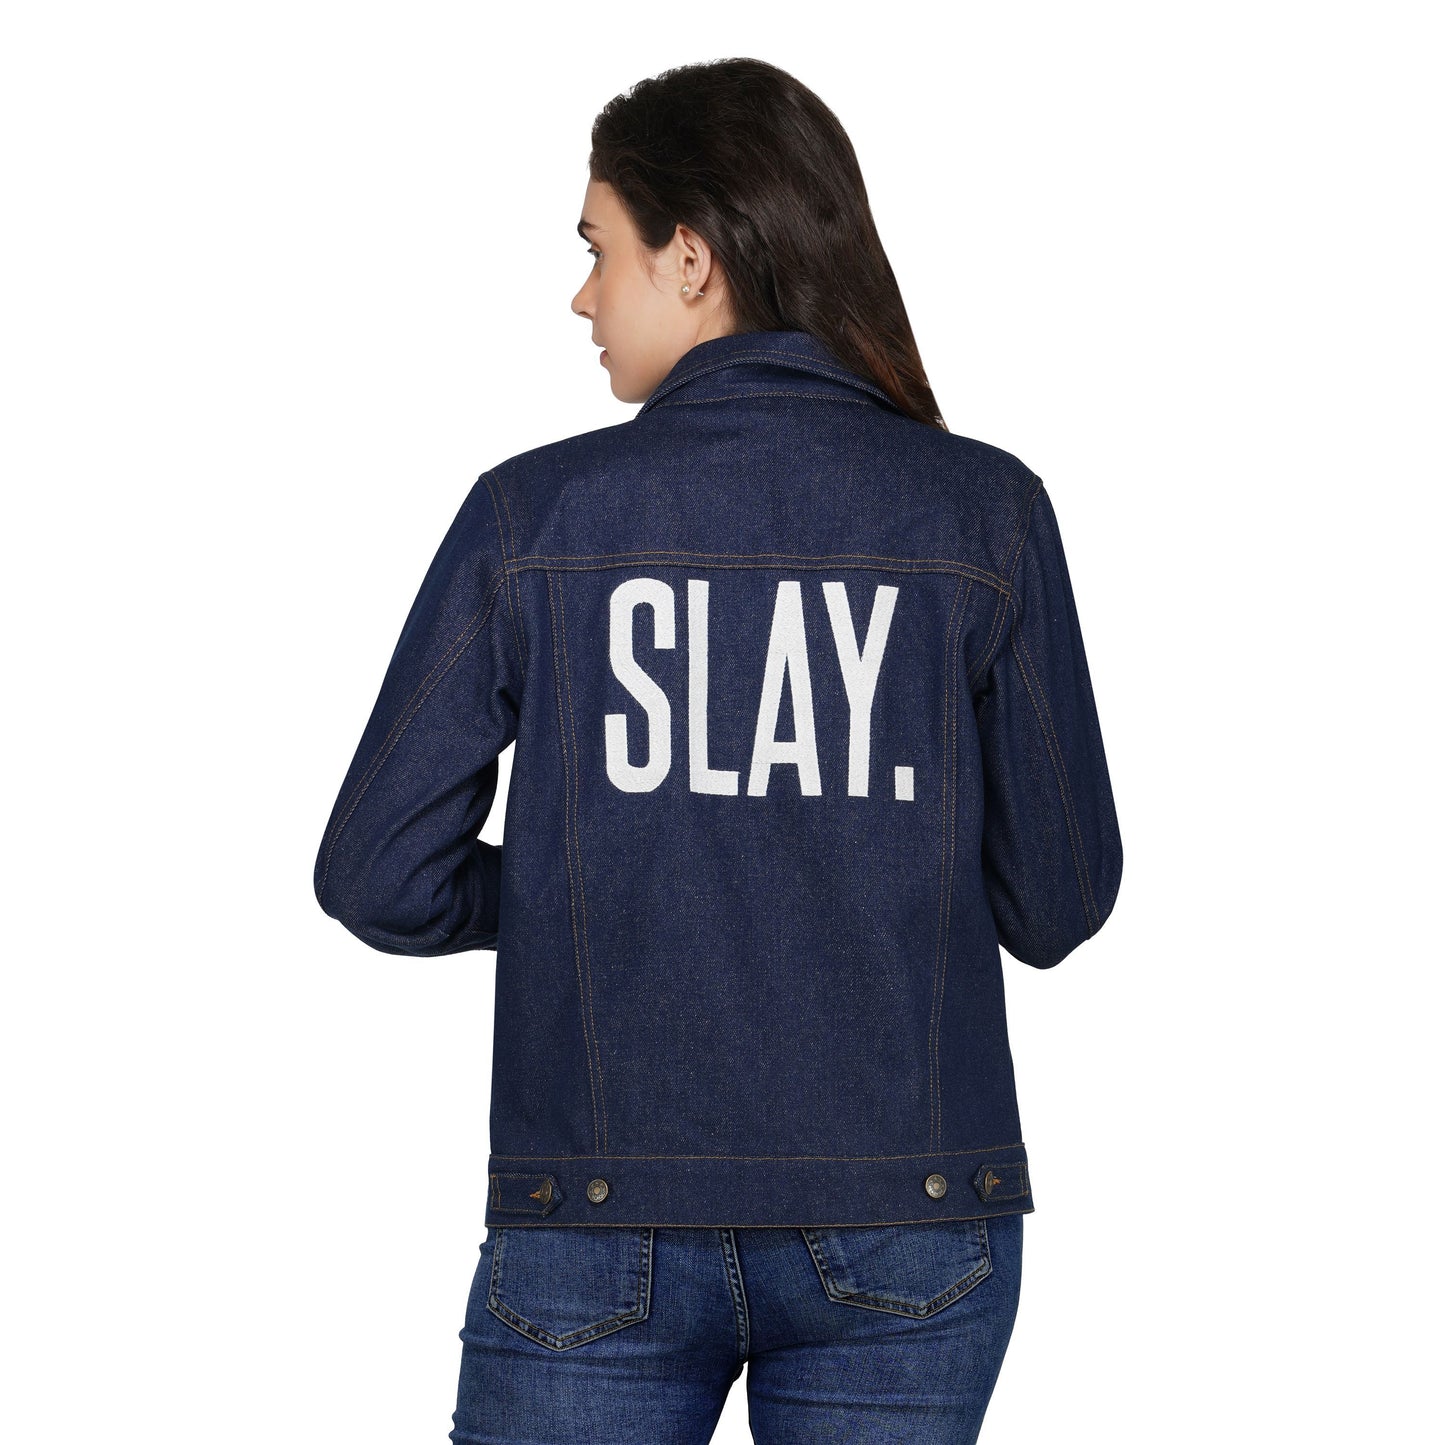 SLAY. Women's Embroidered Navy Blue Denim Jacket-clothing-to-slay.myshopify.com-Denim Jacket